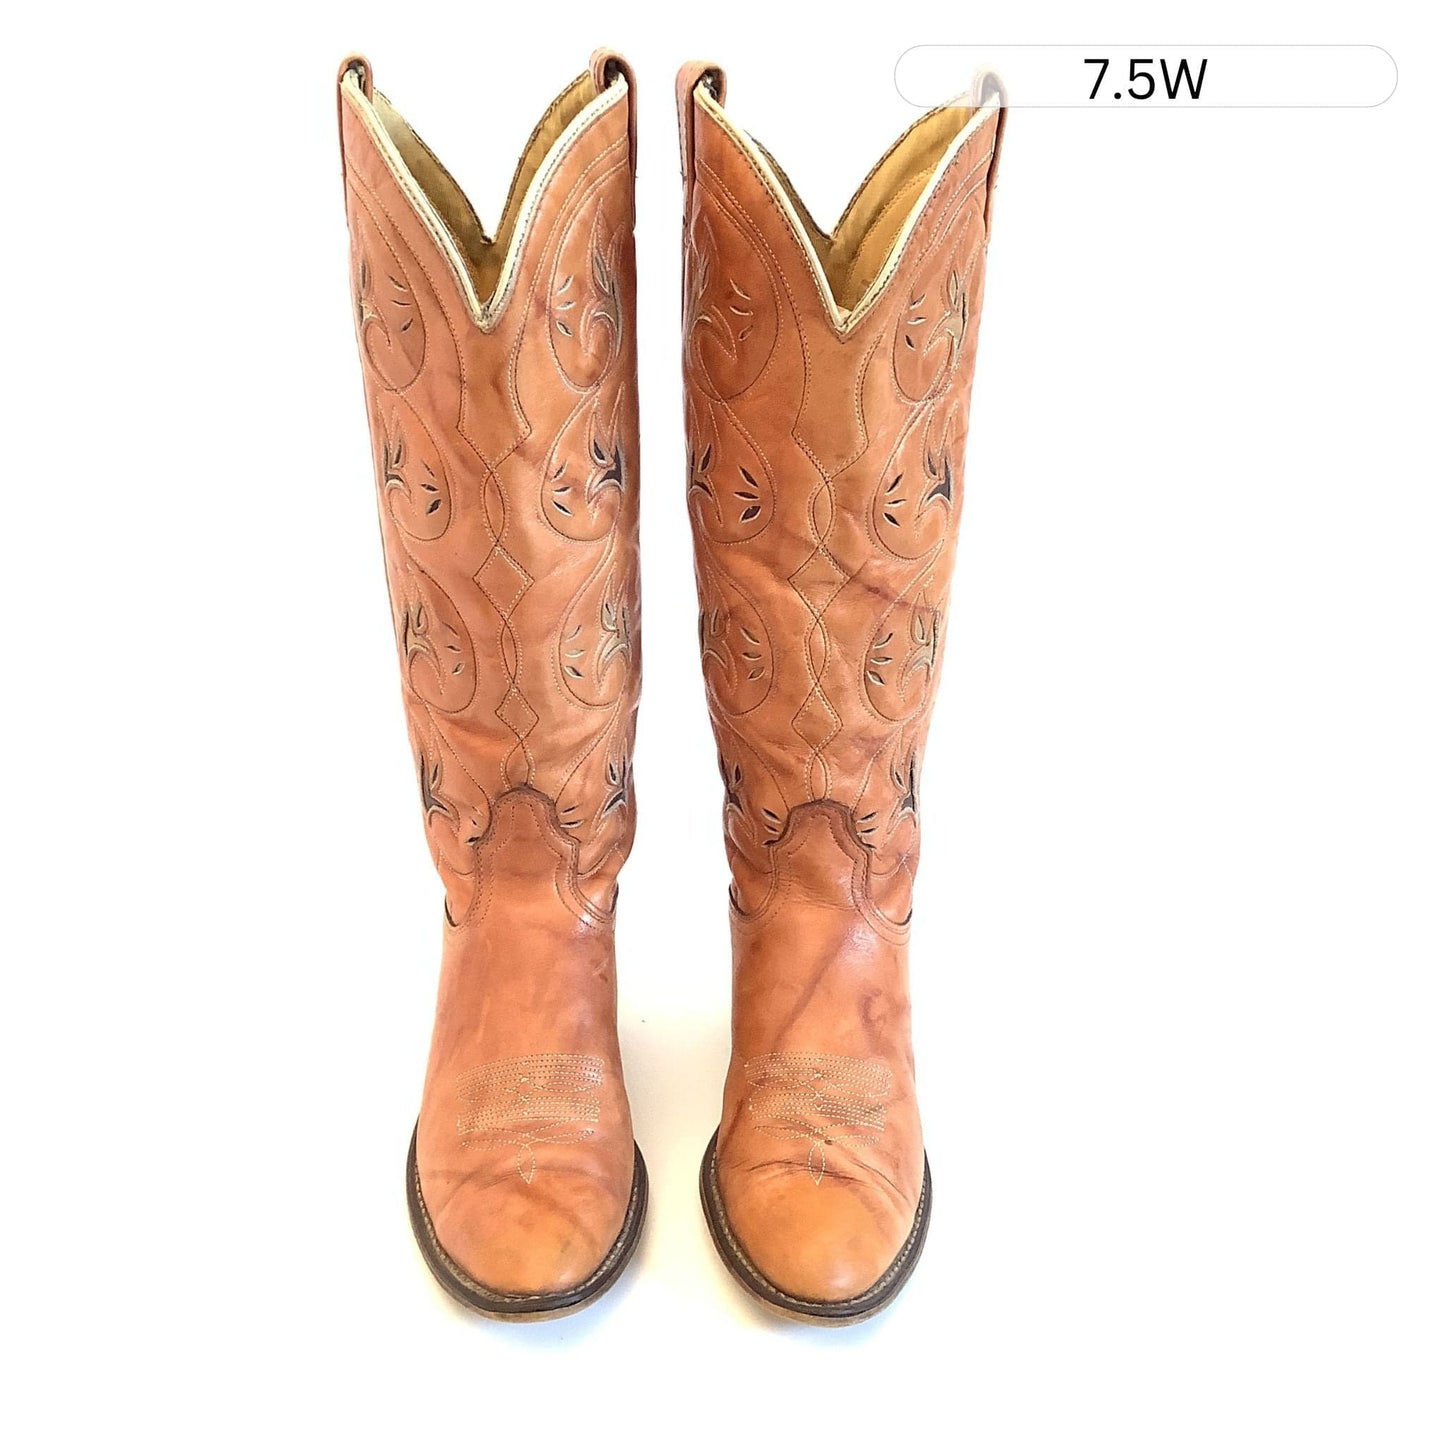 Vintage Tall Cowboy Boots